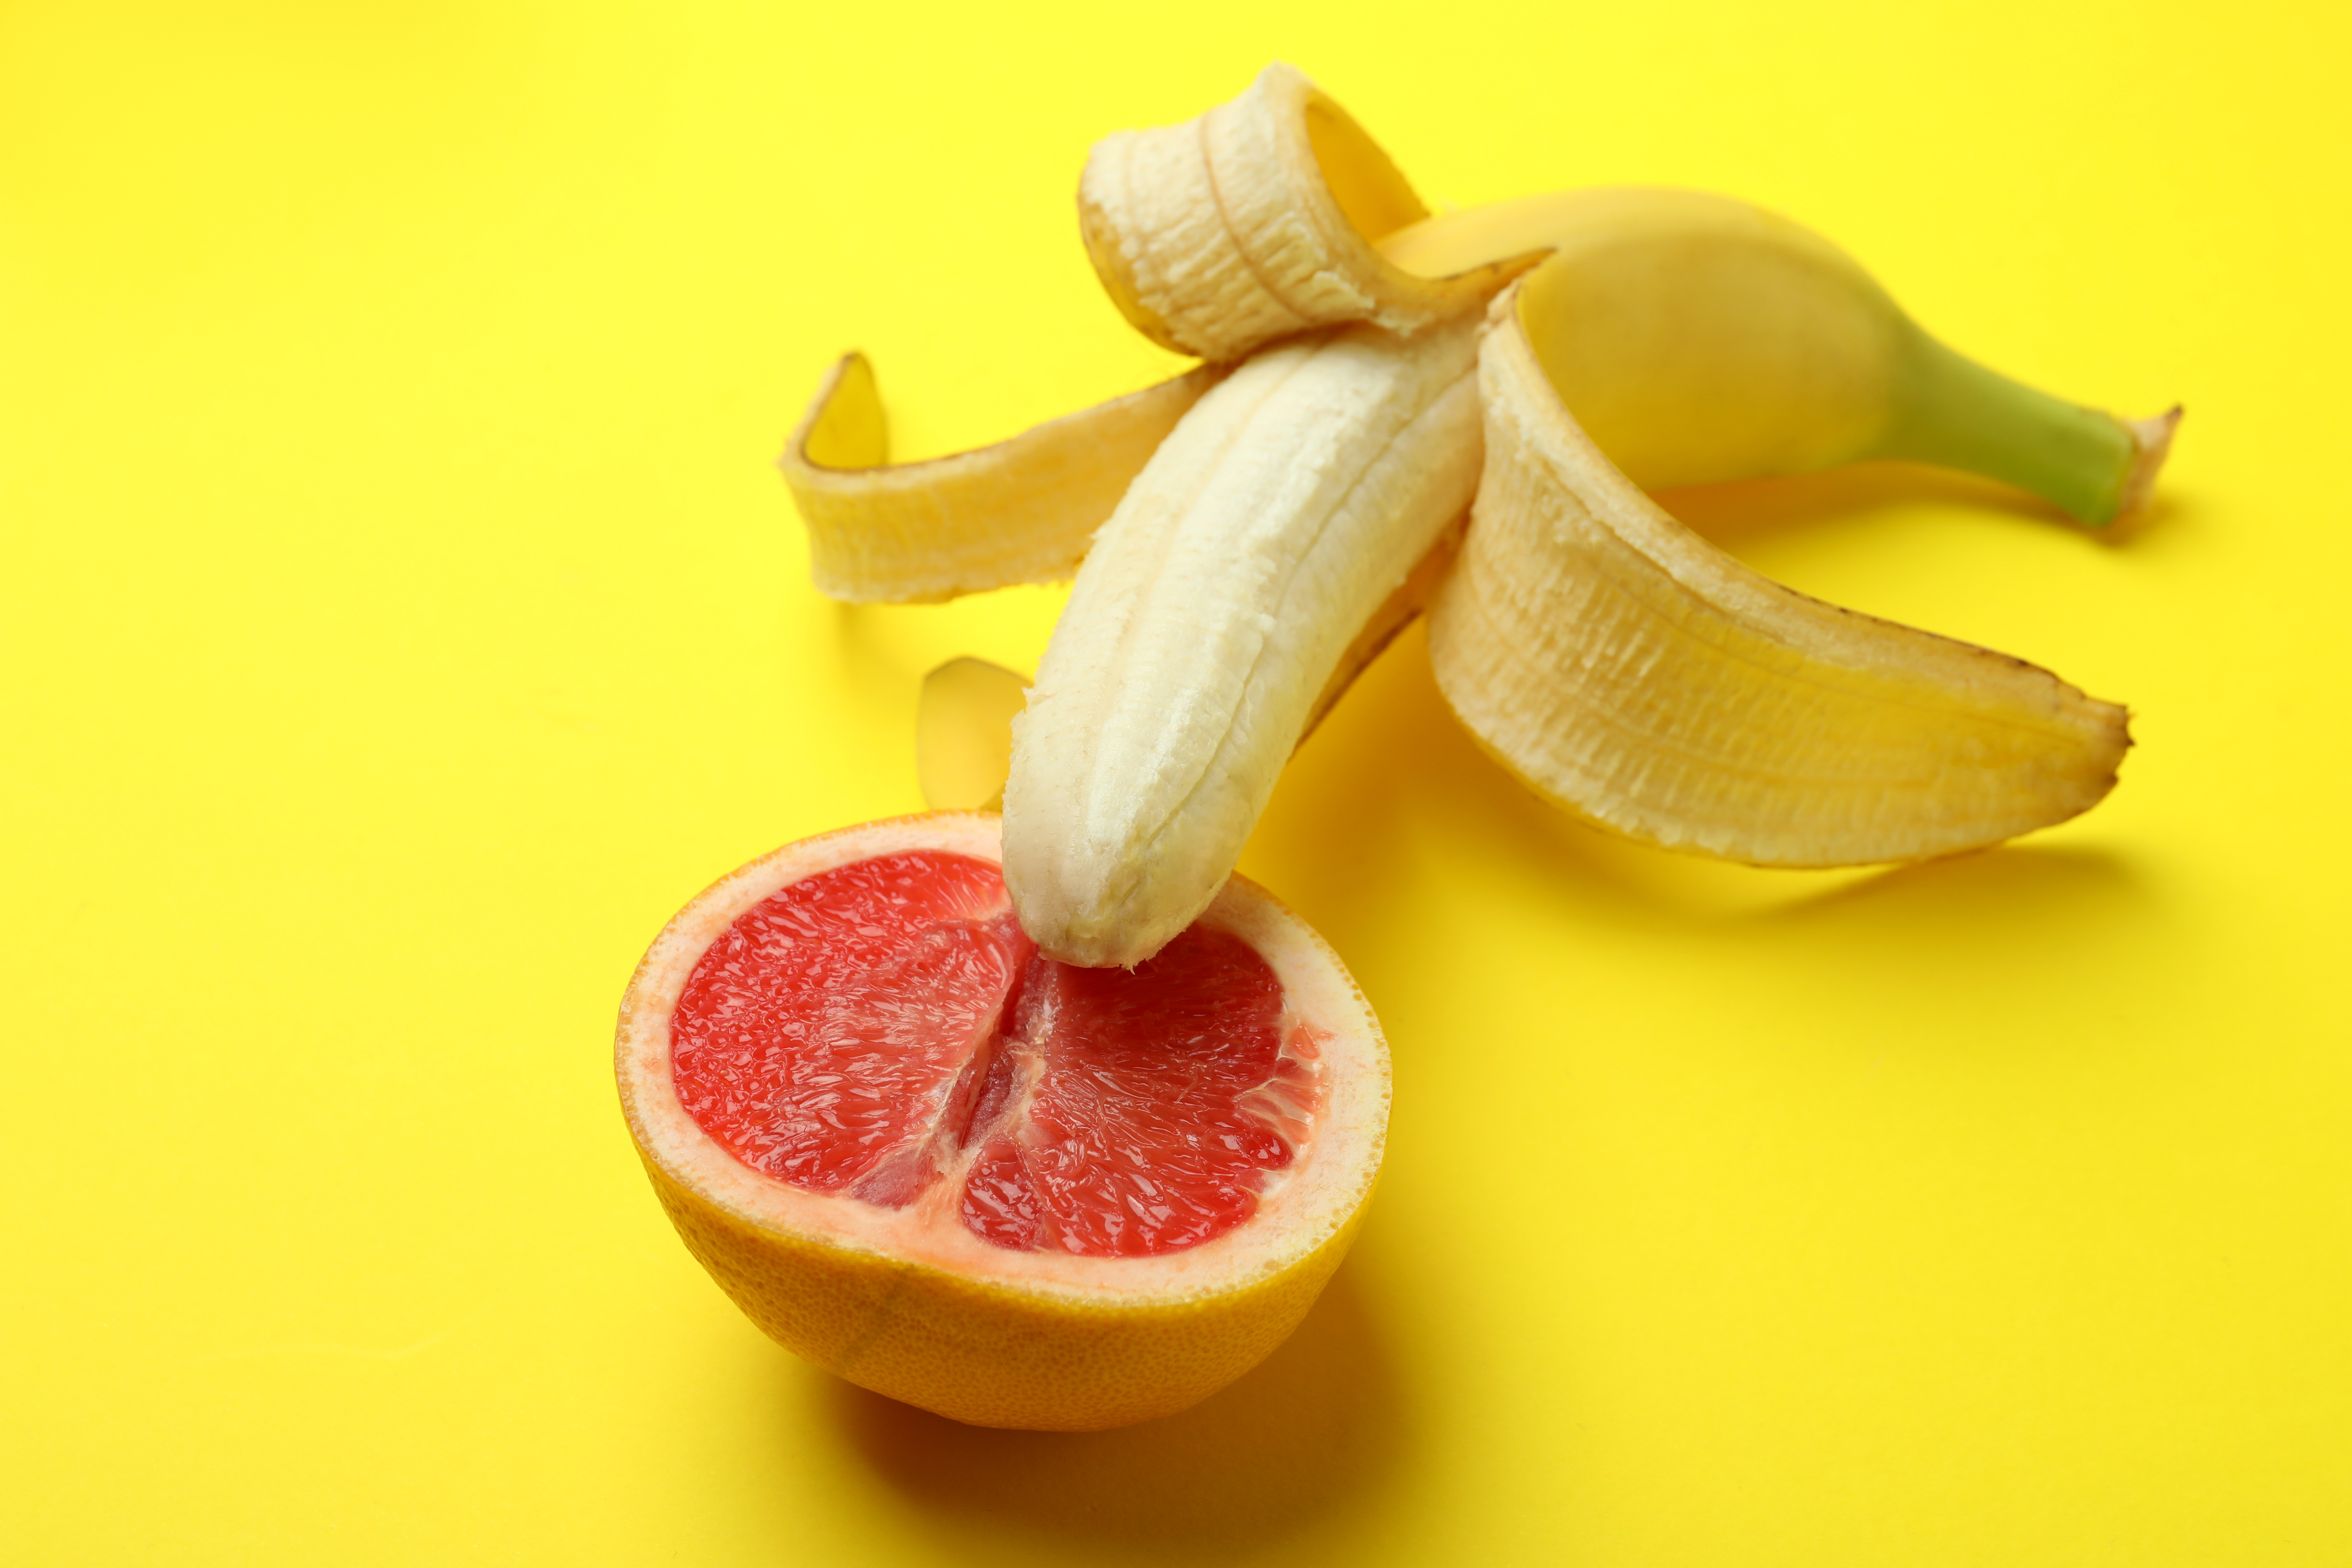 Banana with grapefruit half on yellow background